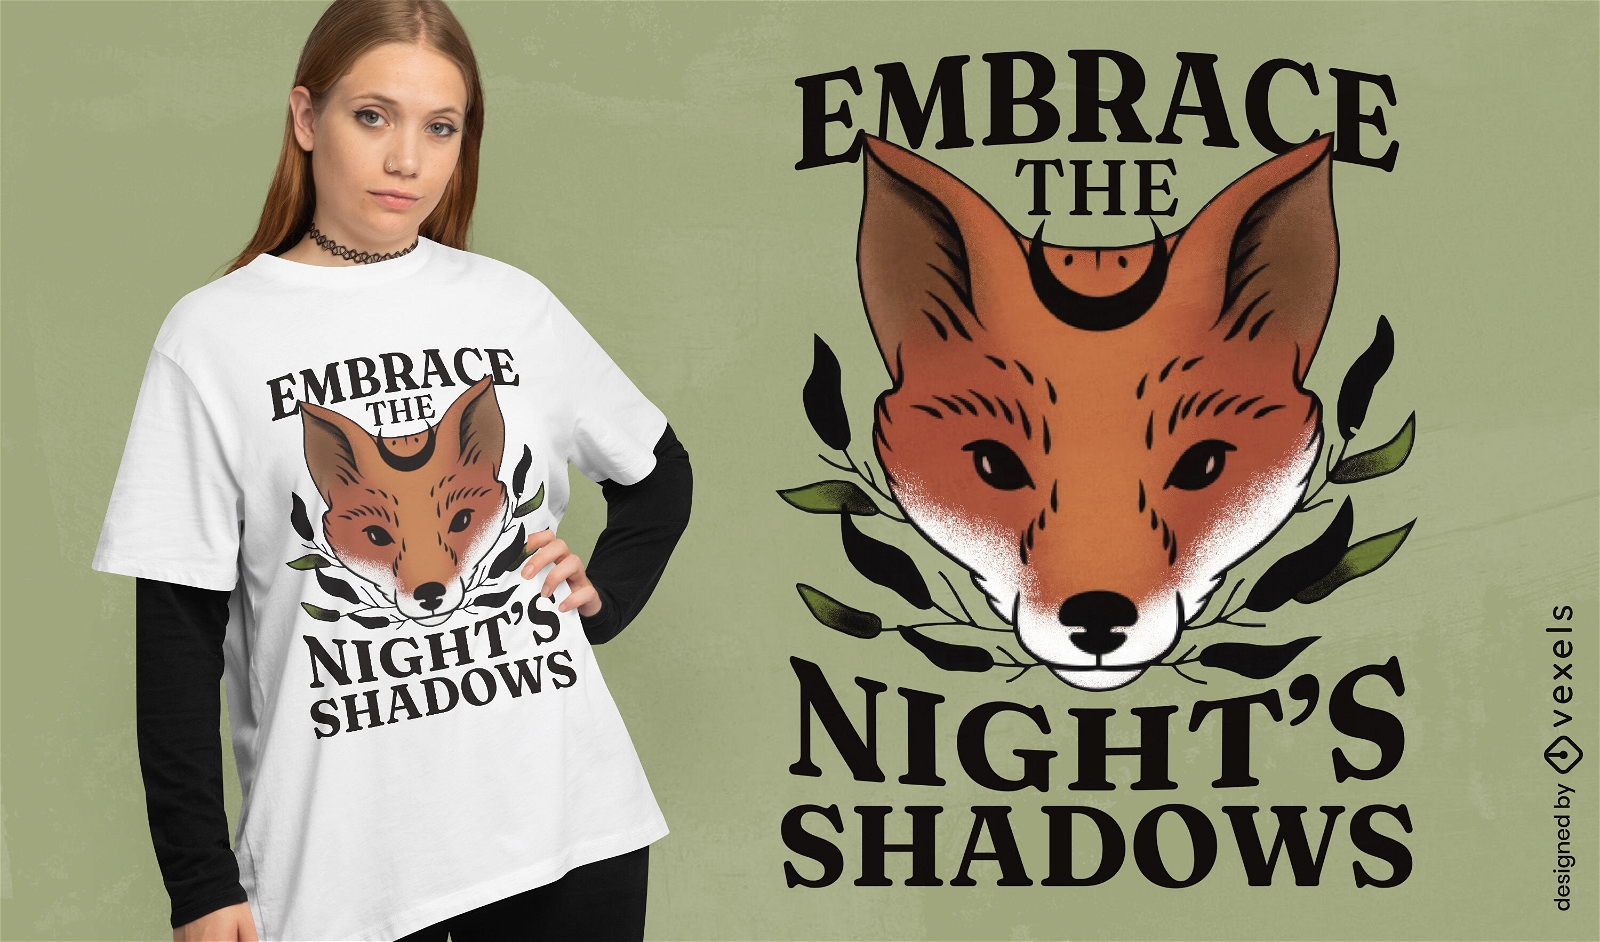 Night's shadows fox t-shirt design